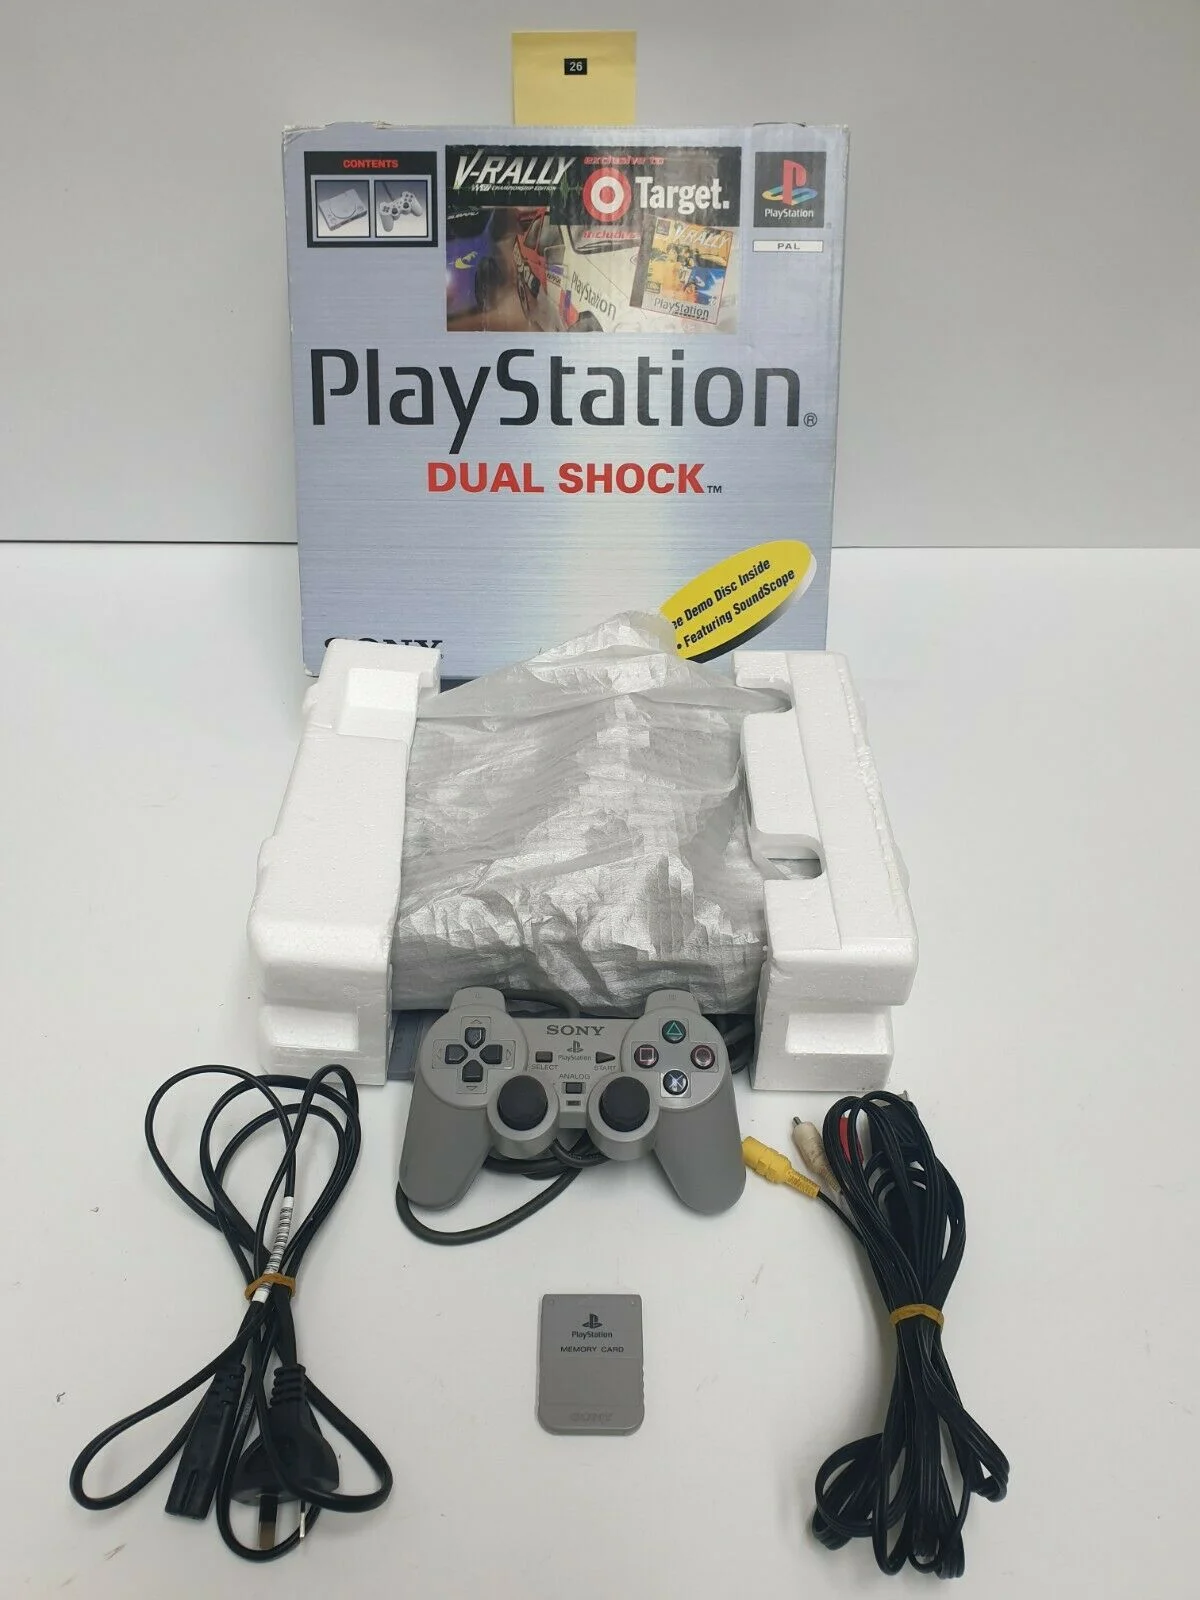  Sony PlayStation Target V-Rally Bundle